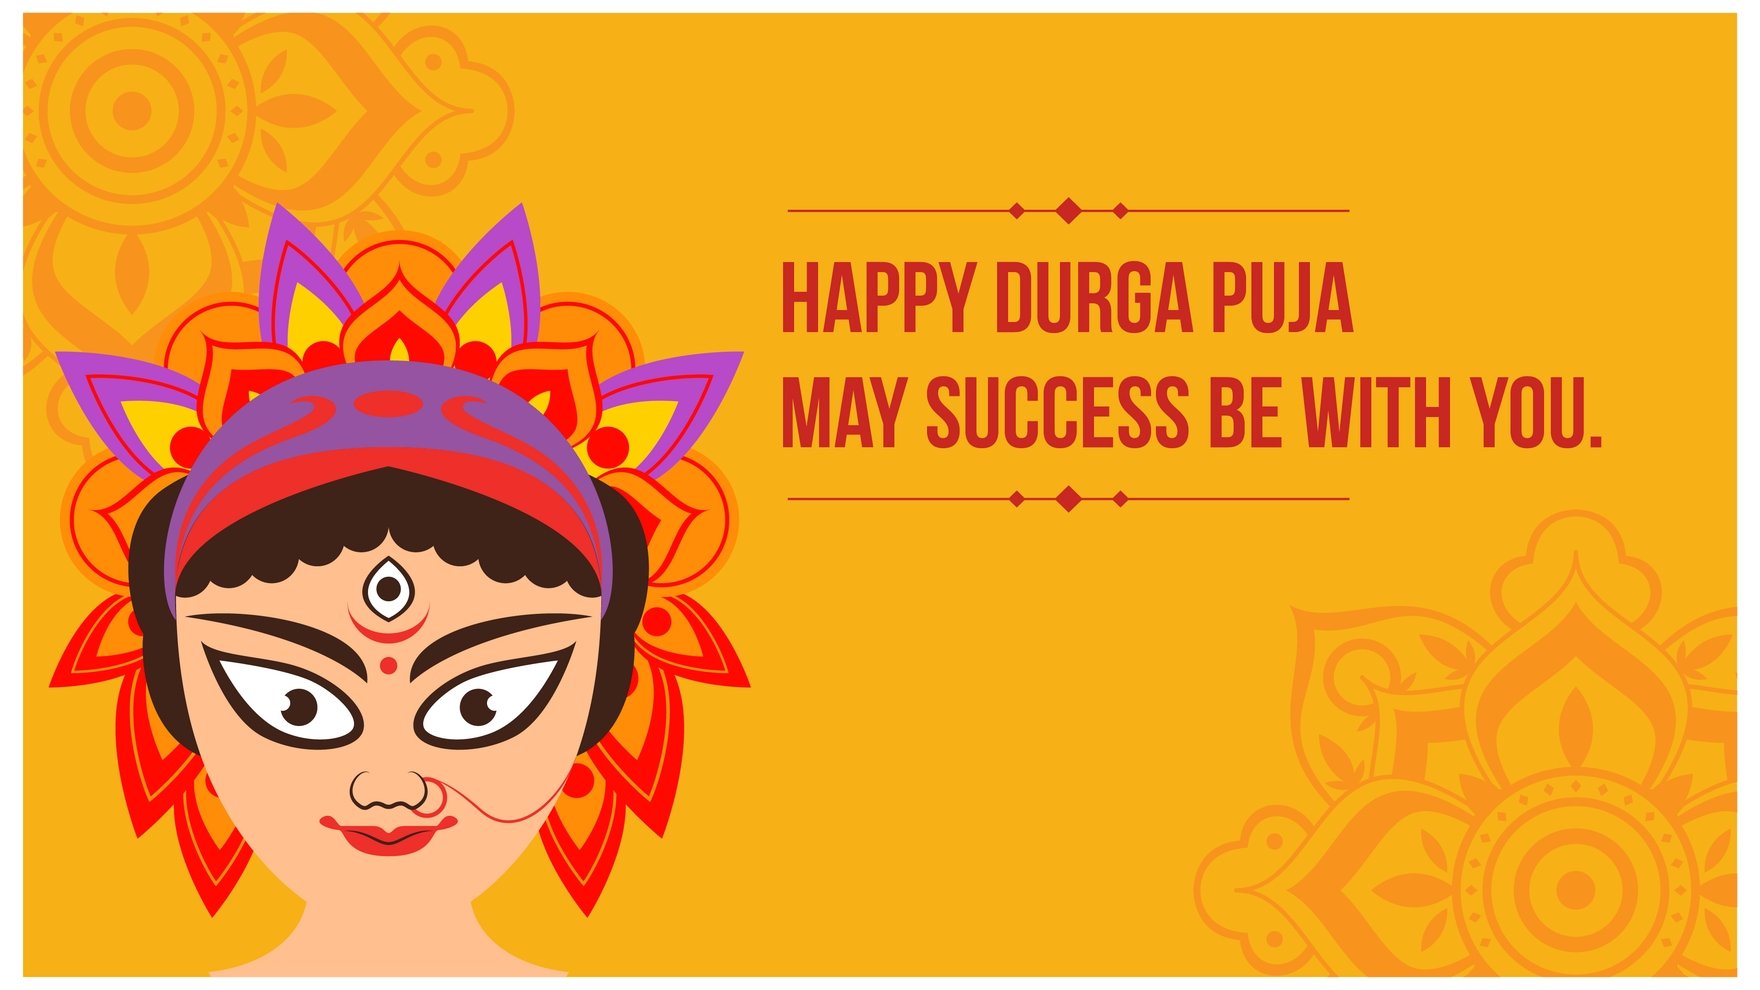 FREE Puja Background - Image Download in PDF, Illustrator, Photoshop